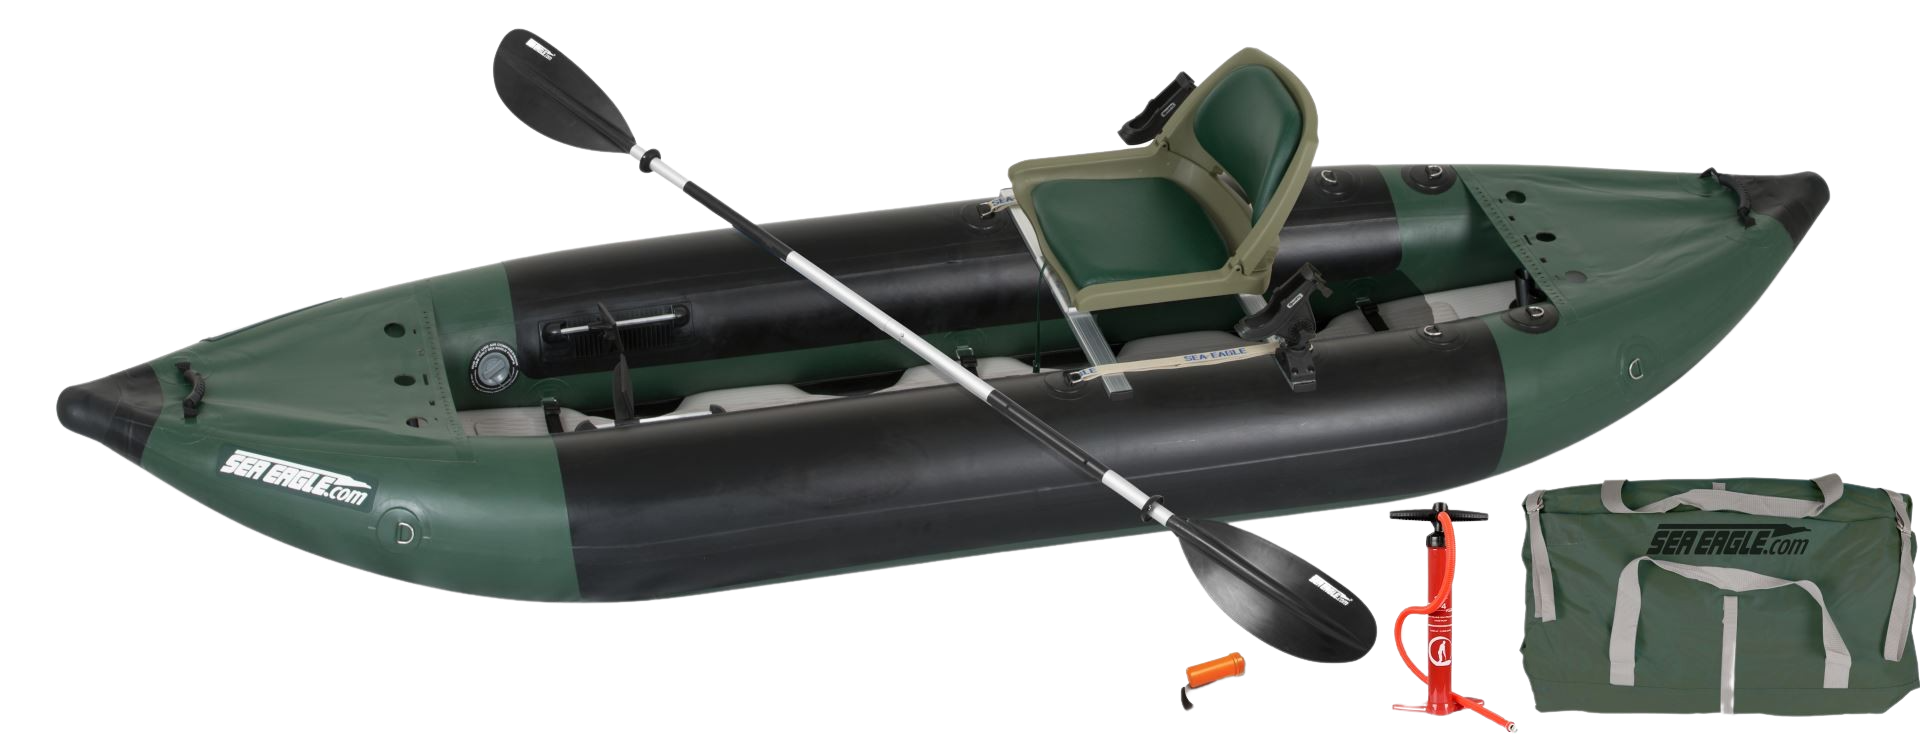 Sea Eagle, Sea Eagle 350FX Explorer Inflatable Kayak Swivel Seat Fishing Rig Package Green Black New